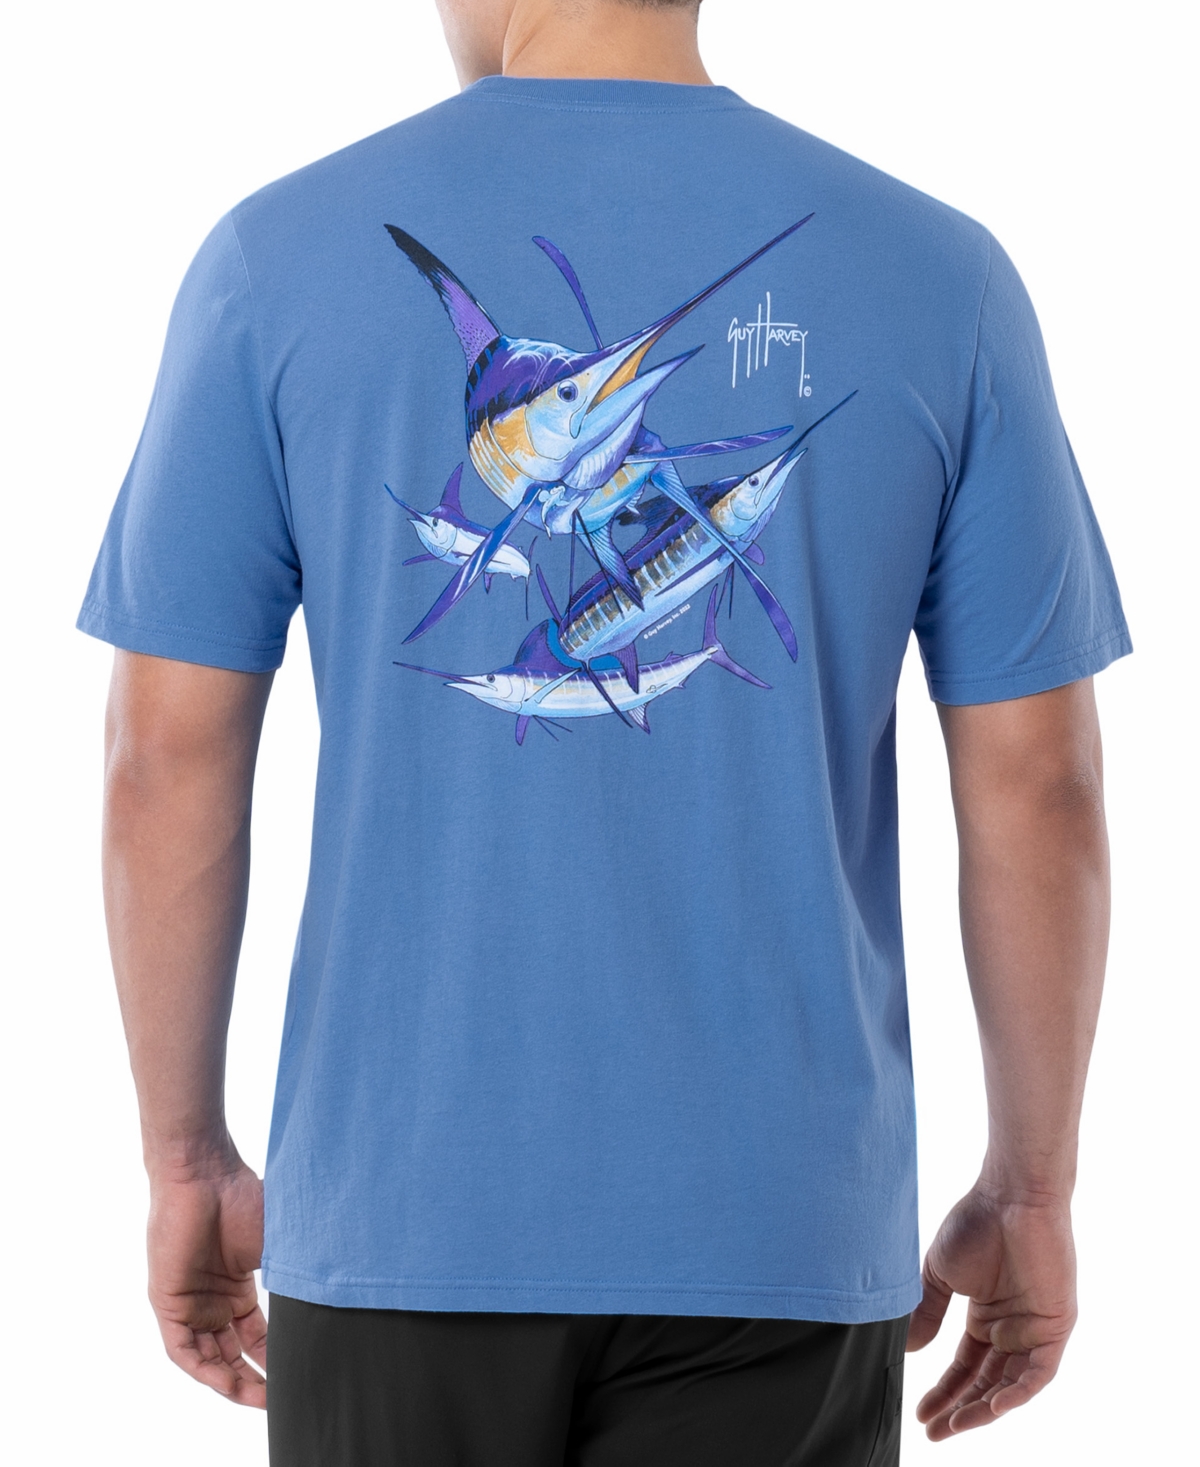 Men's Short Sleeve Crewneck Graphic T-Shirt - Azure Blue